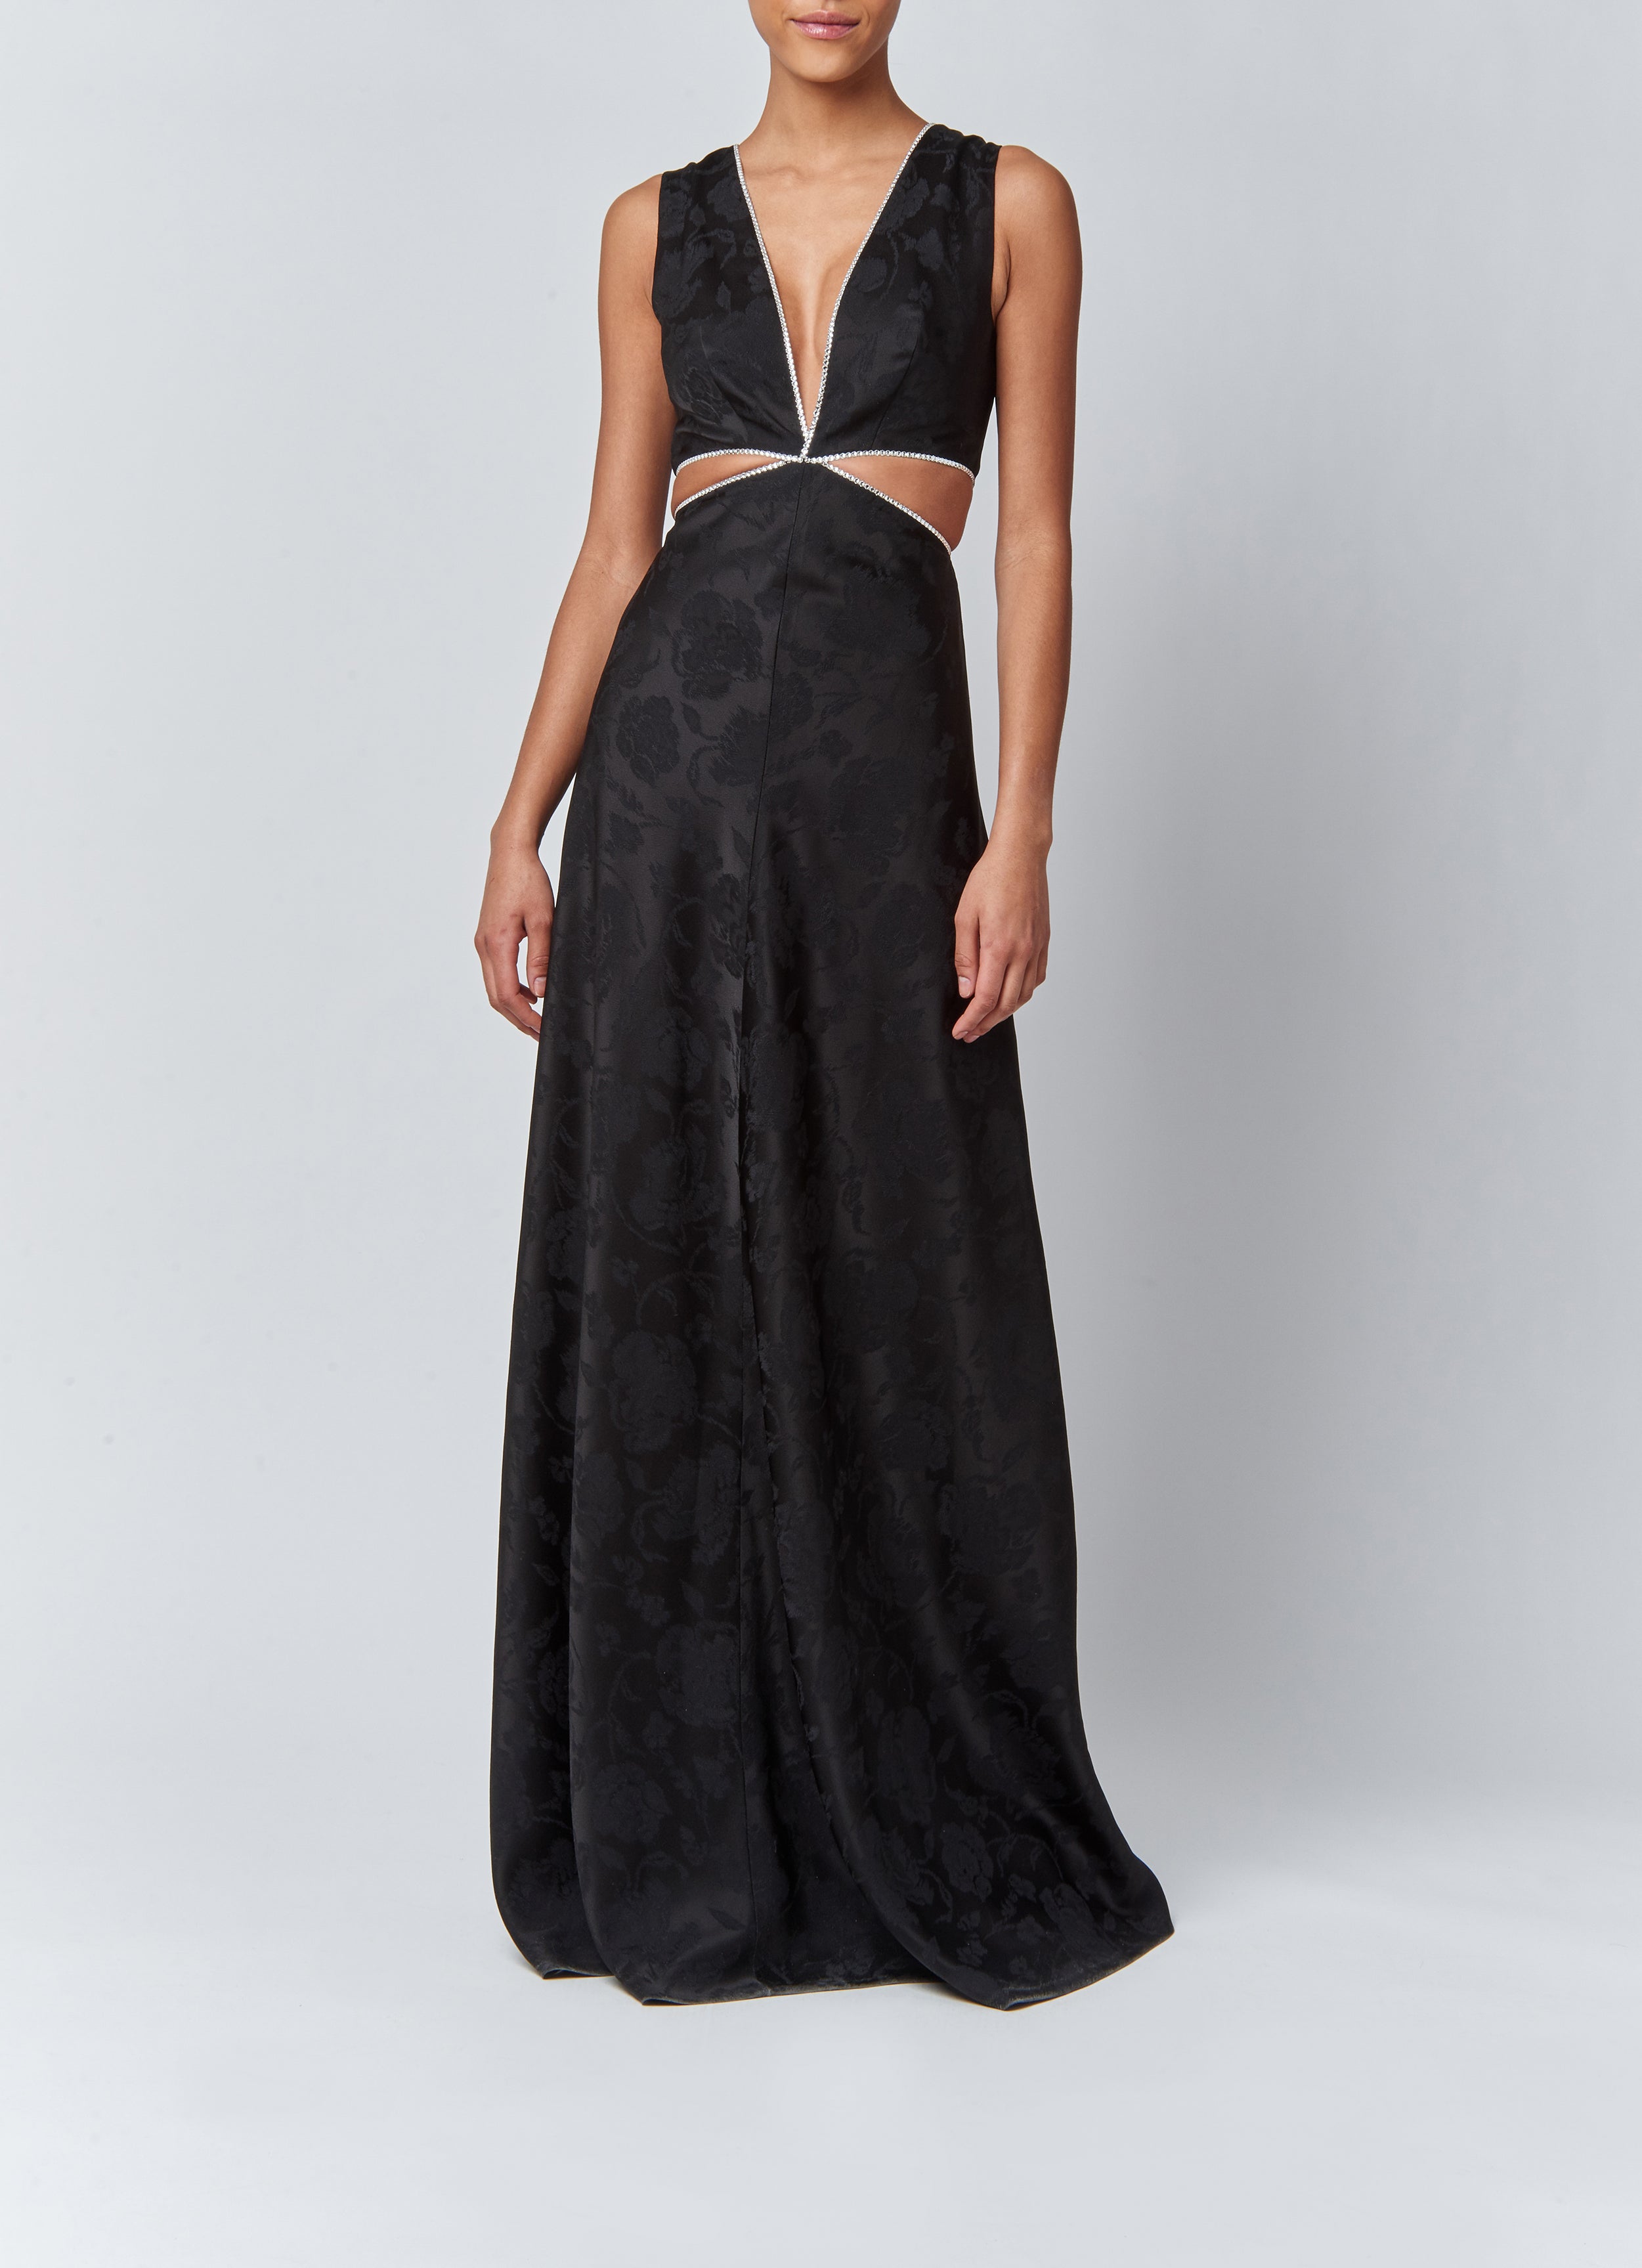 Pyrra Black Jacquard Cut Out Gown with Swarovski Crystal Trim